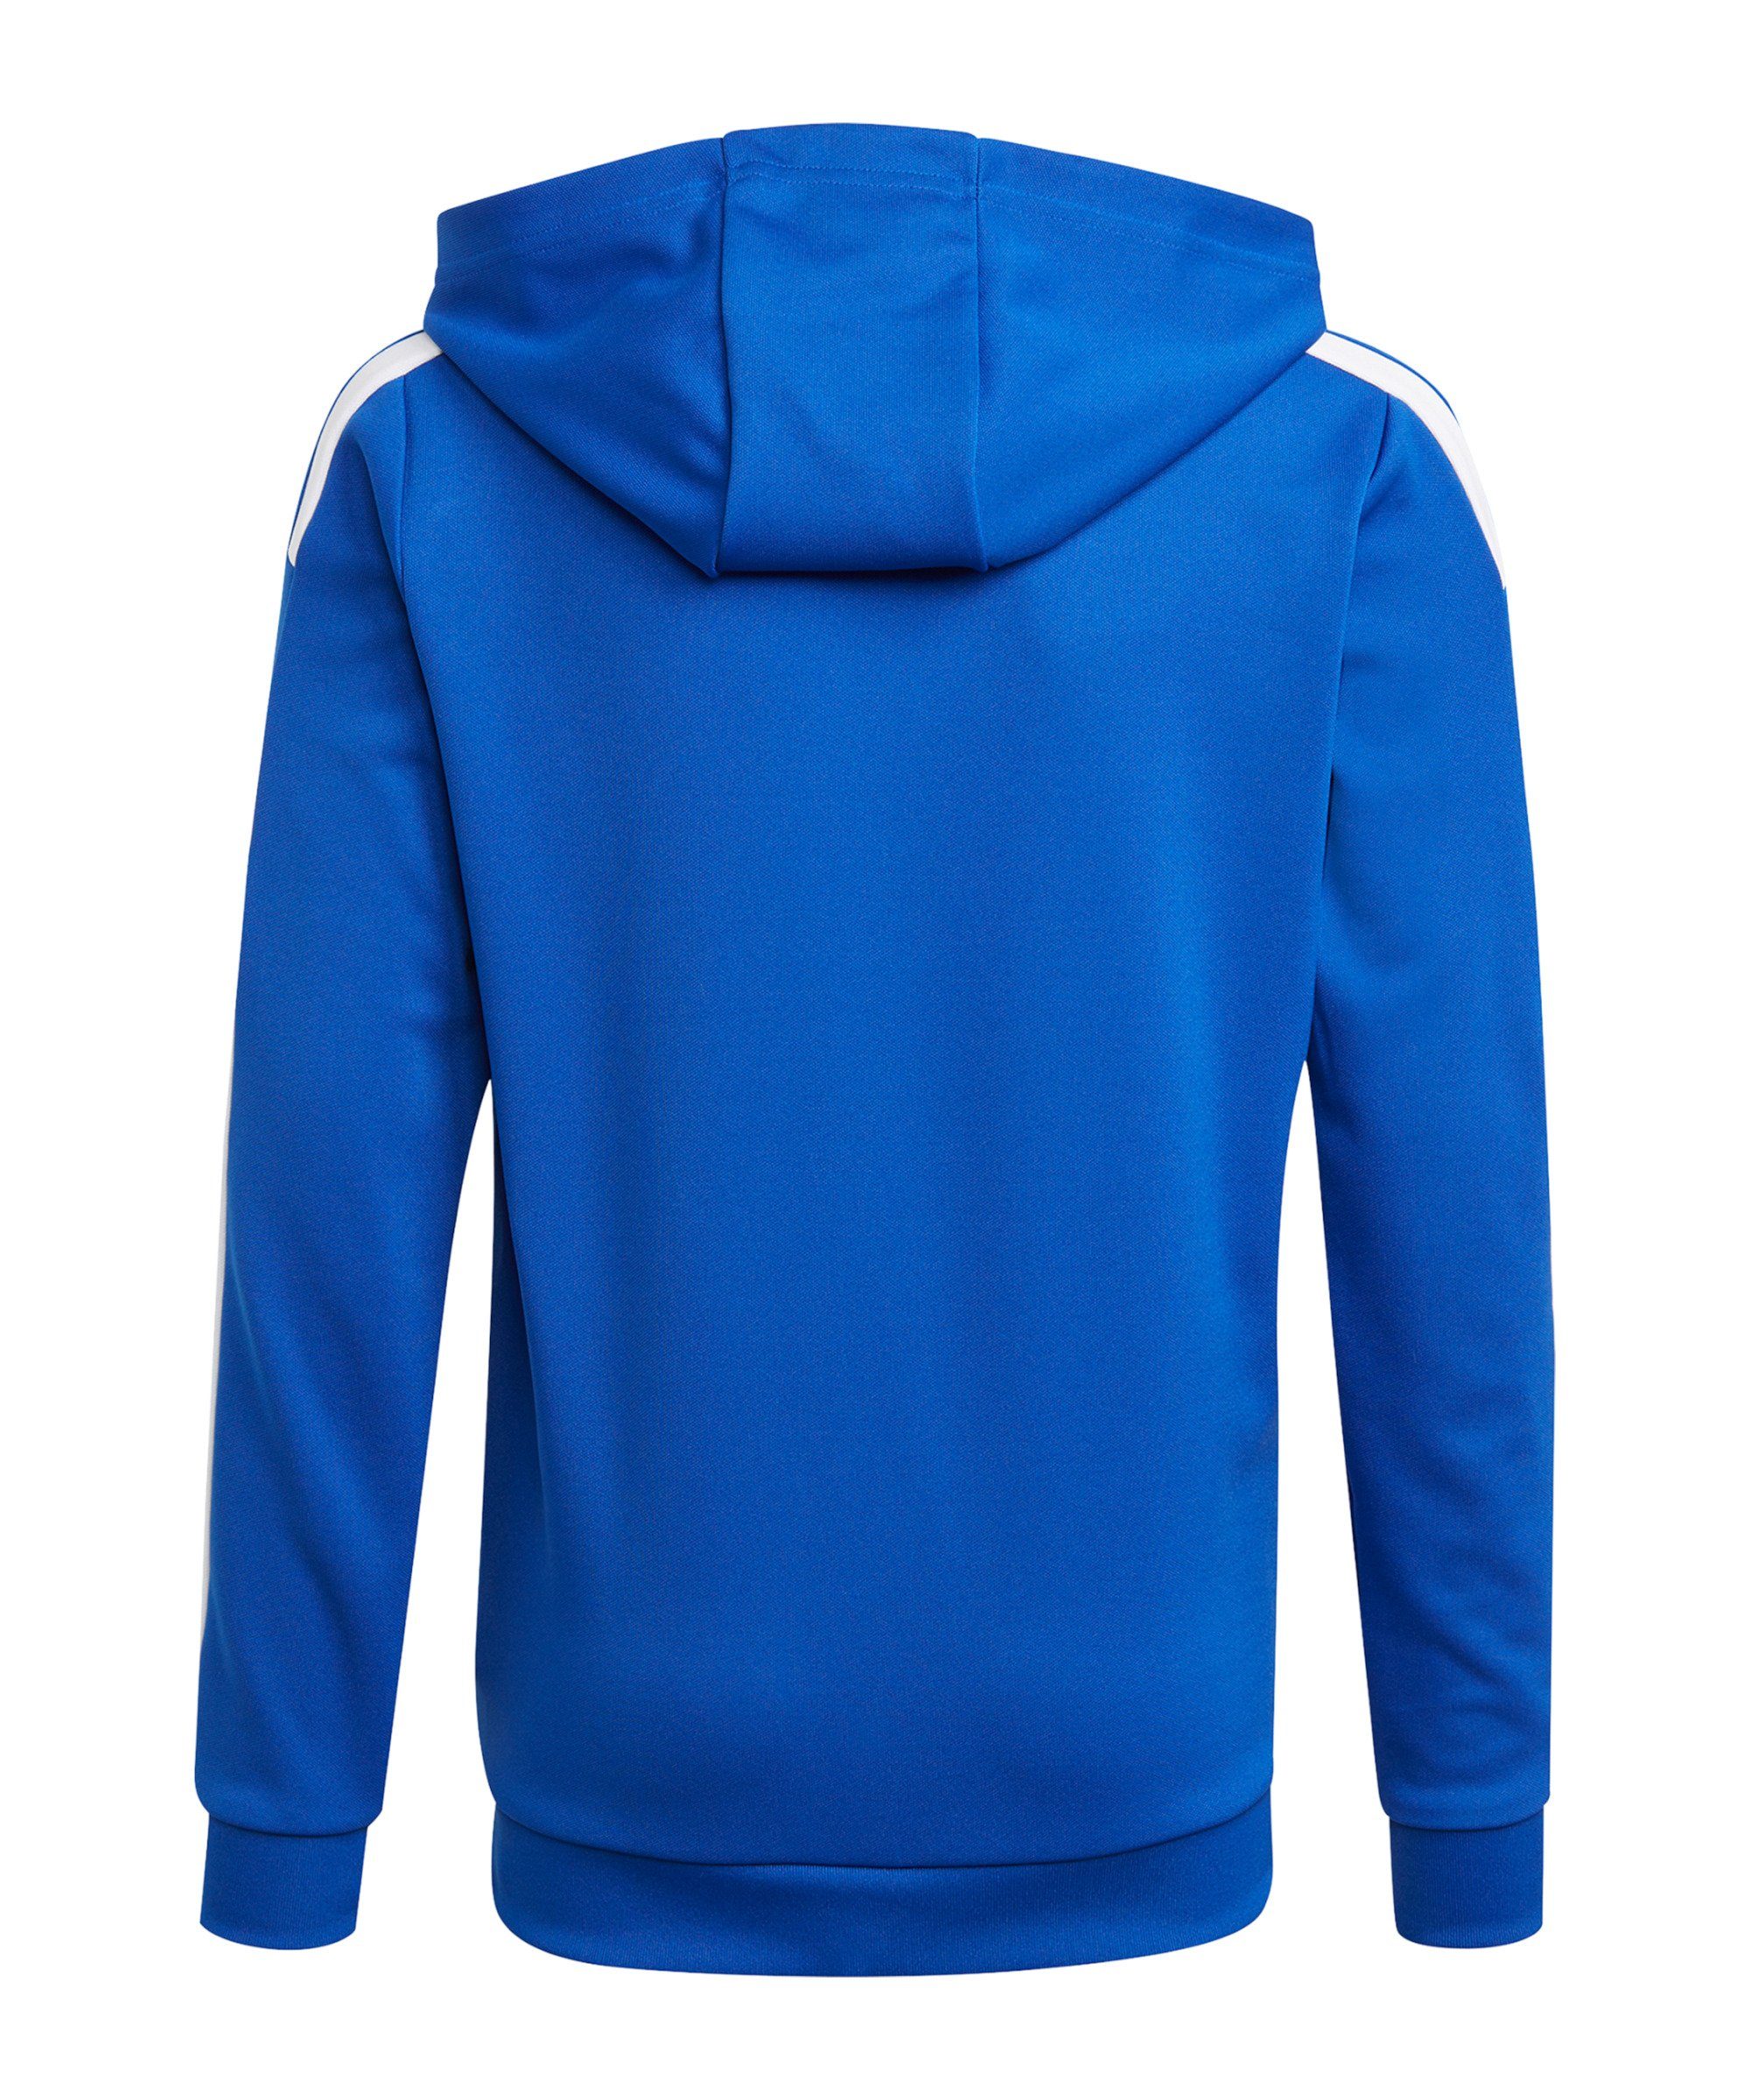 Kids adidas Hoody 21 Squadra blauweiss Performance Sweatshirt